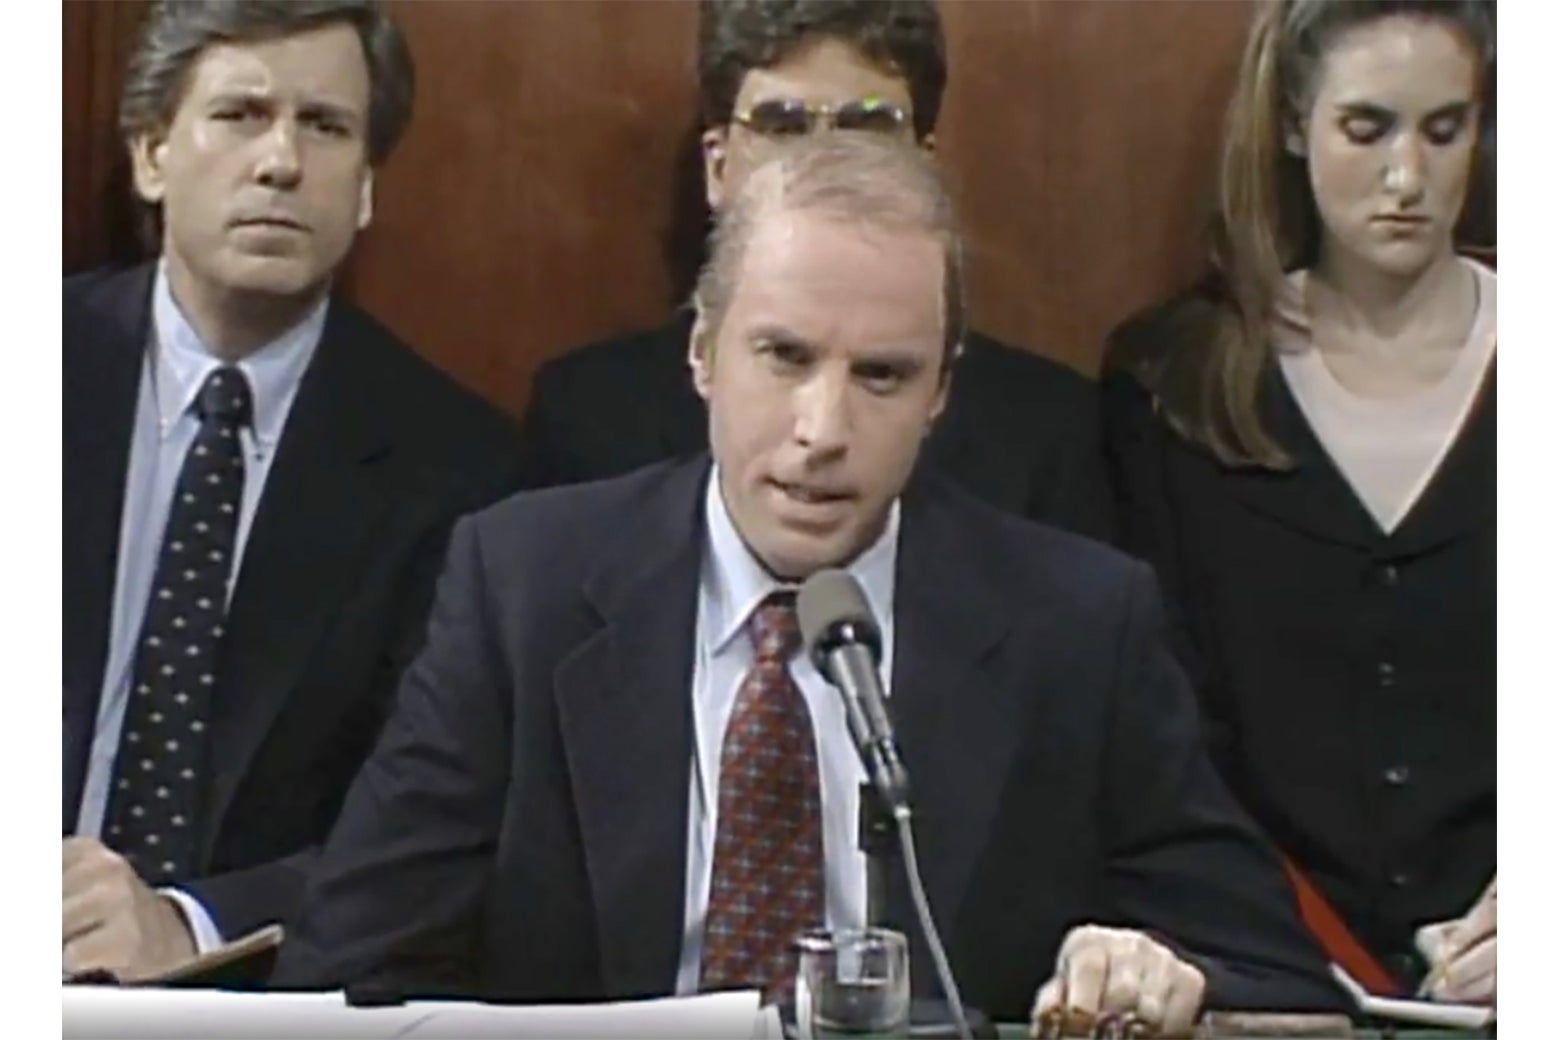 Kevin Nealon as Joe Biden, sitting behind a microphone, on SNL. Three others sit behind him.